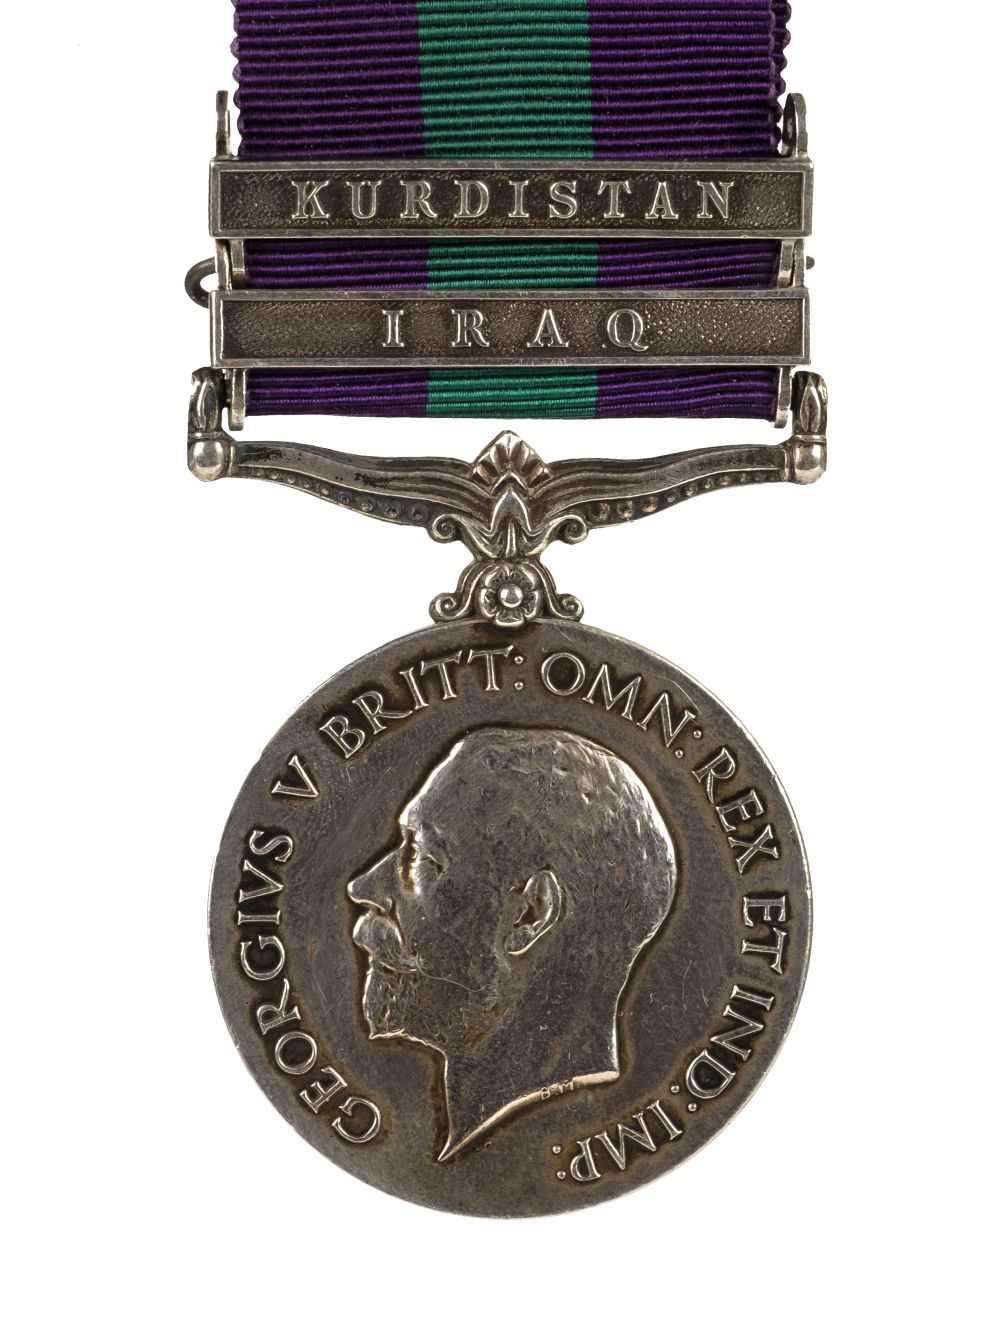 Lot 41 - General Service Medal - Private J. Langan, Royal Army Medical Corps